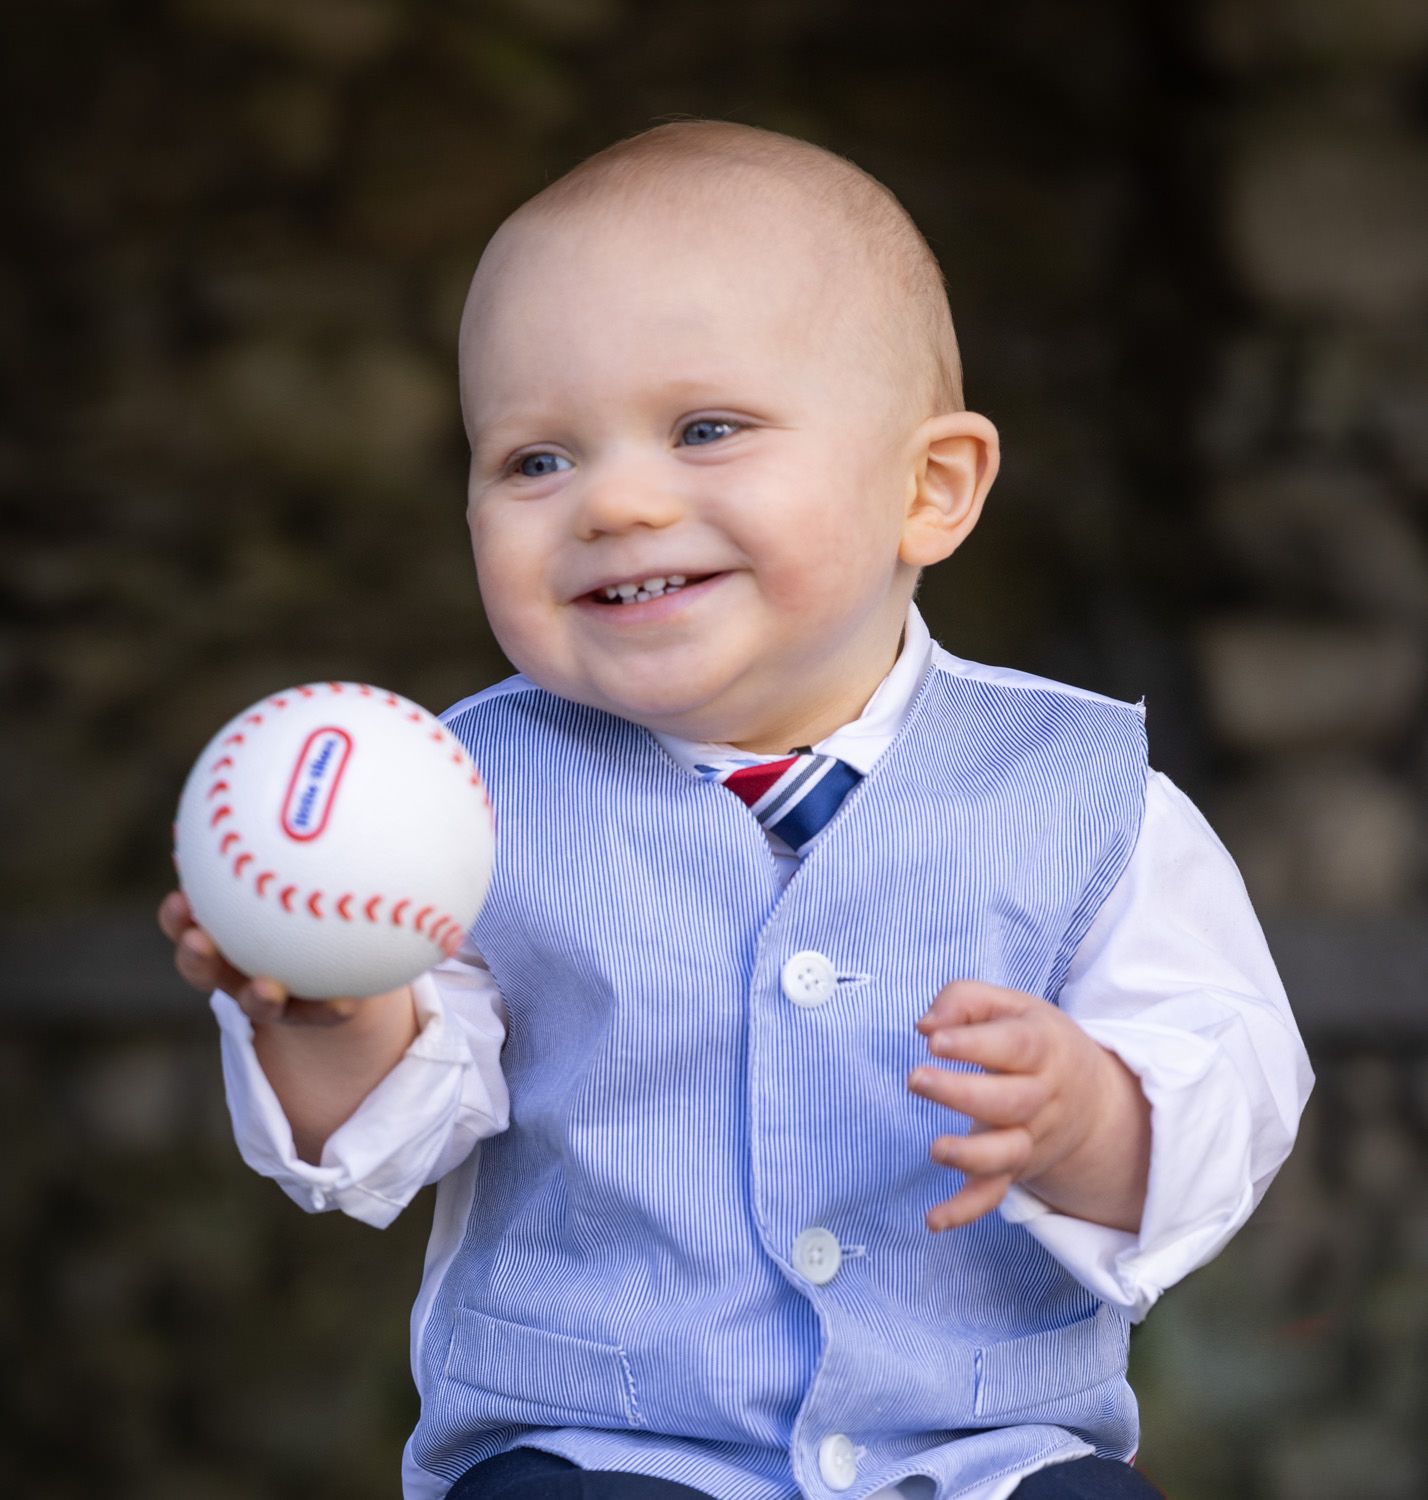 Baby with baseball